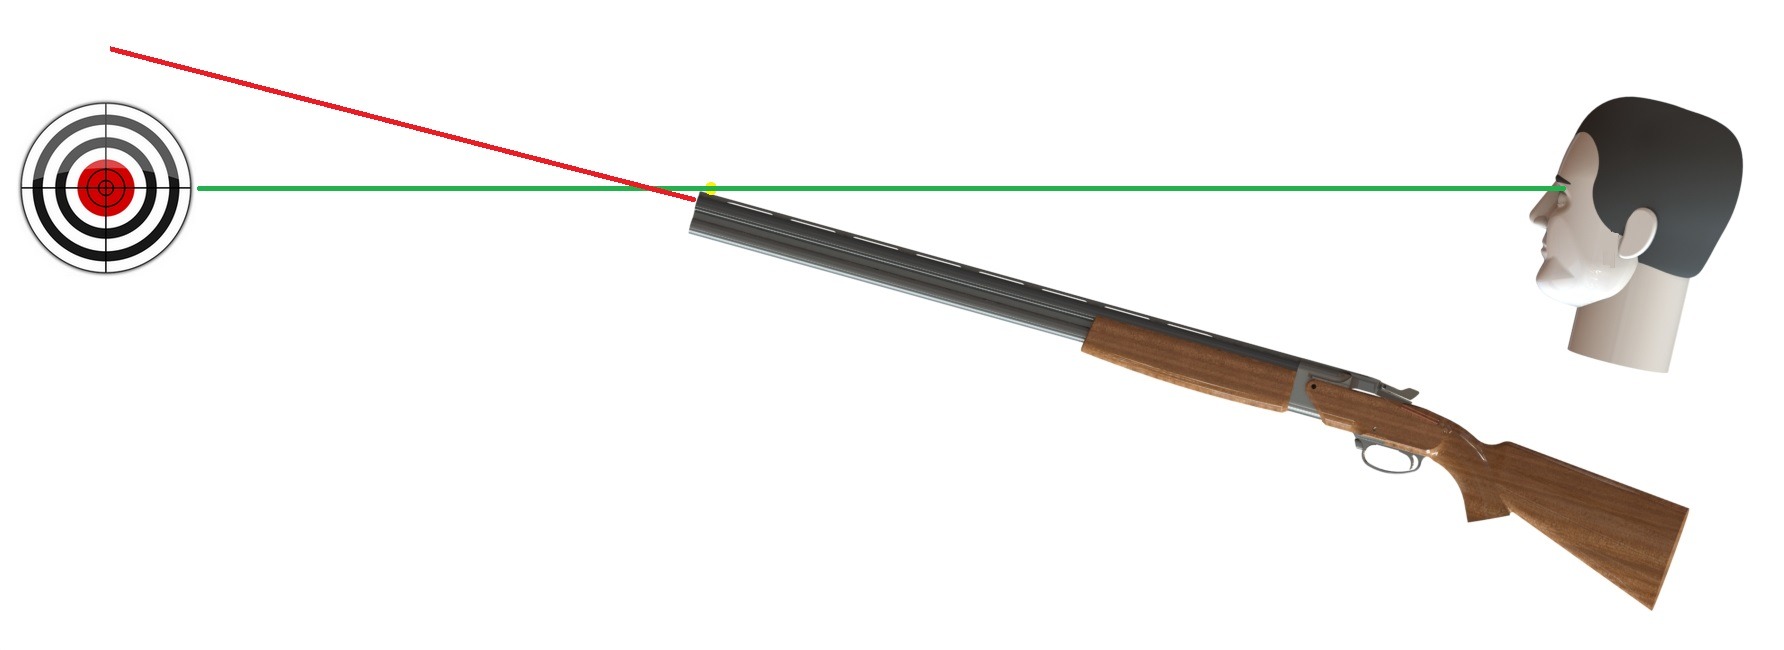 Gunsight using fiber optics